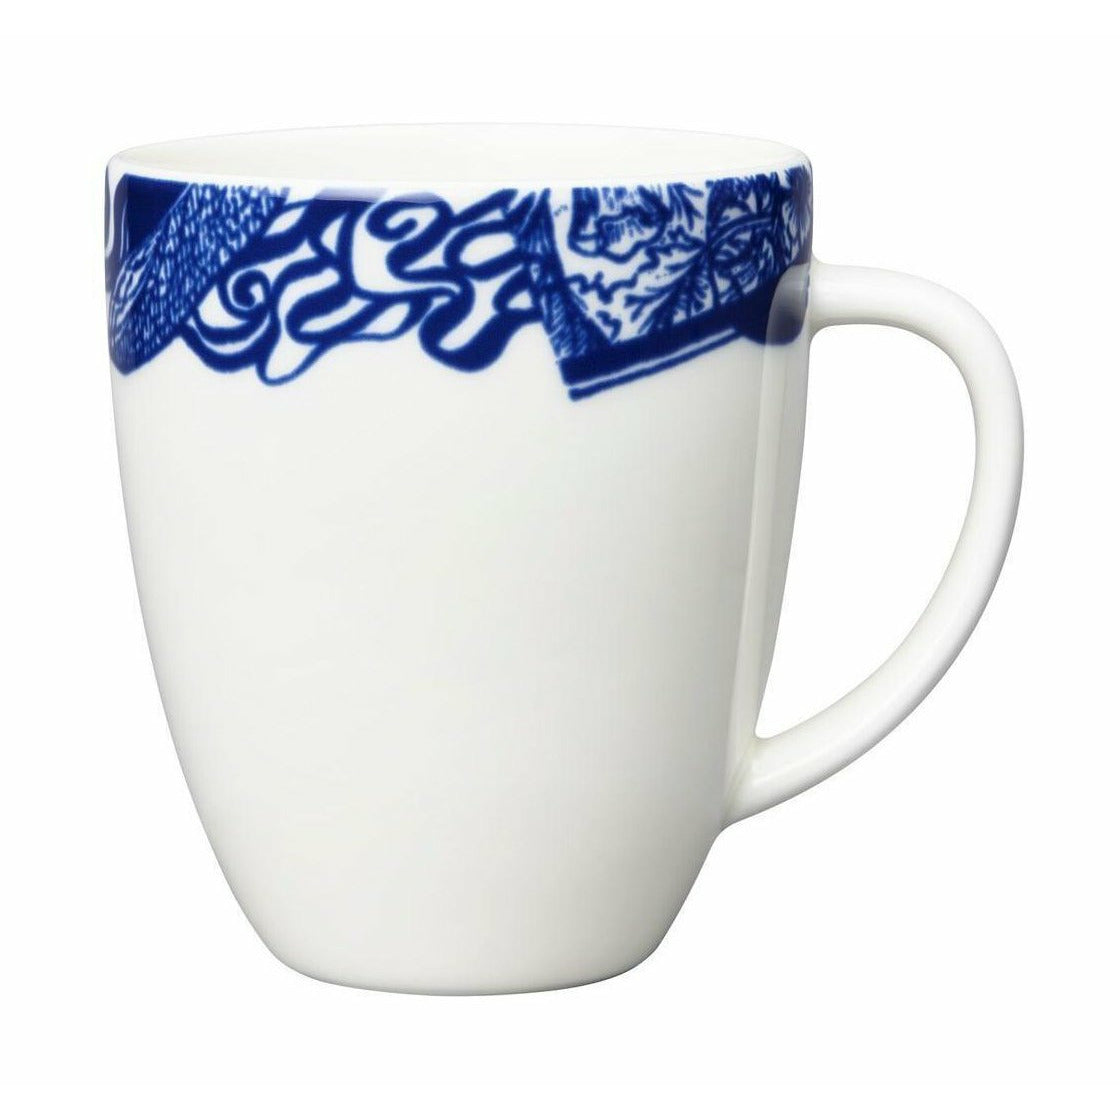 Arabia Pastoraali Vase 13 cm, bianco/blu